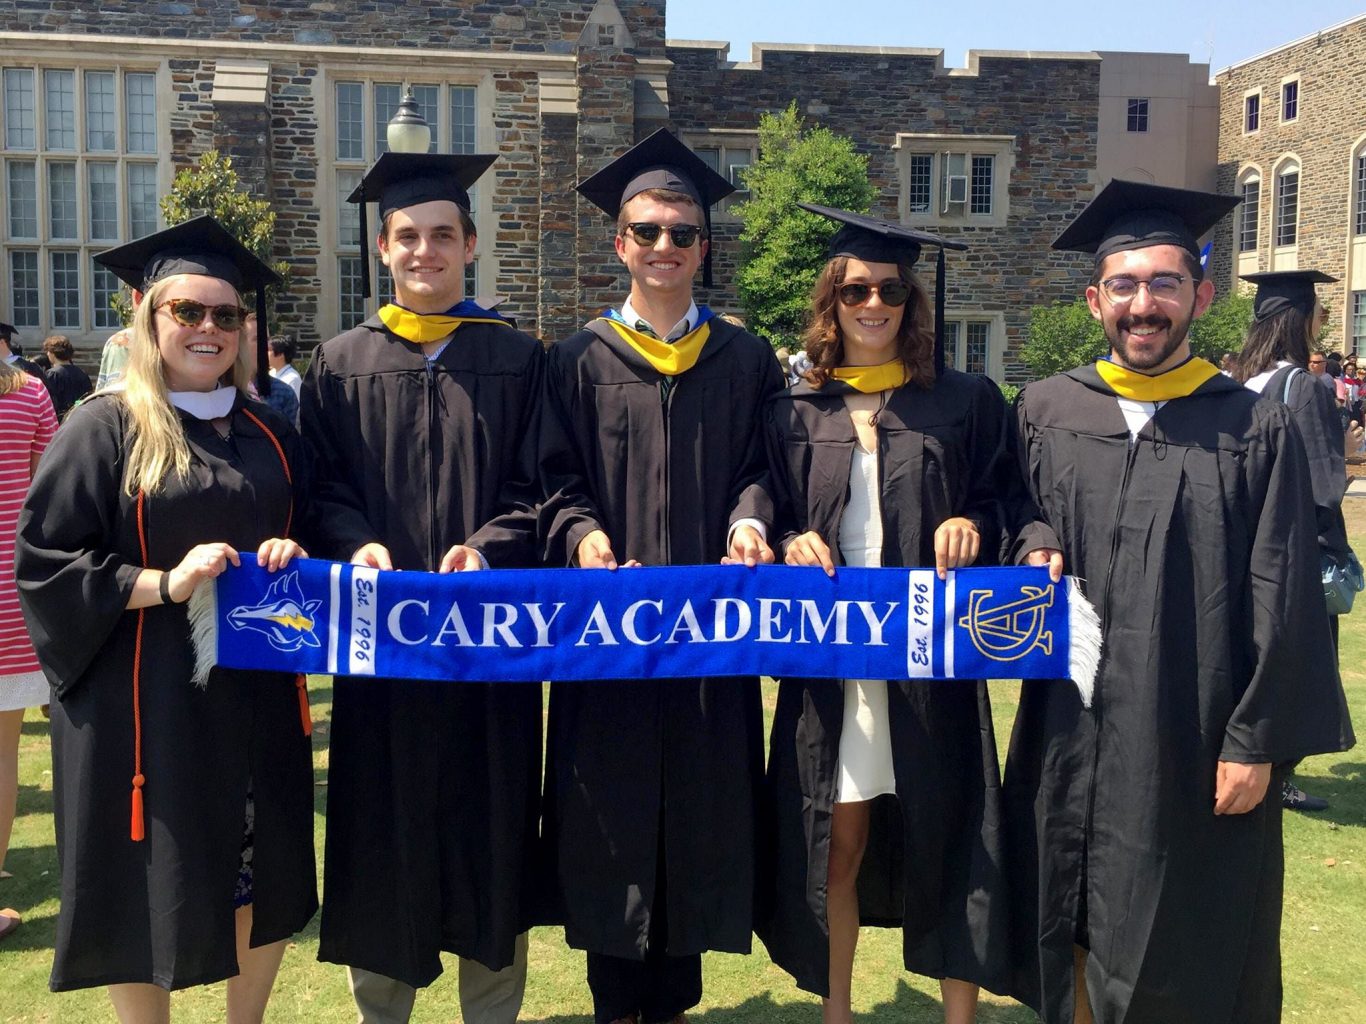 Cary Academy alumni graduating from Duke University